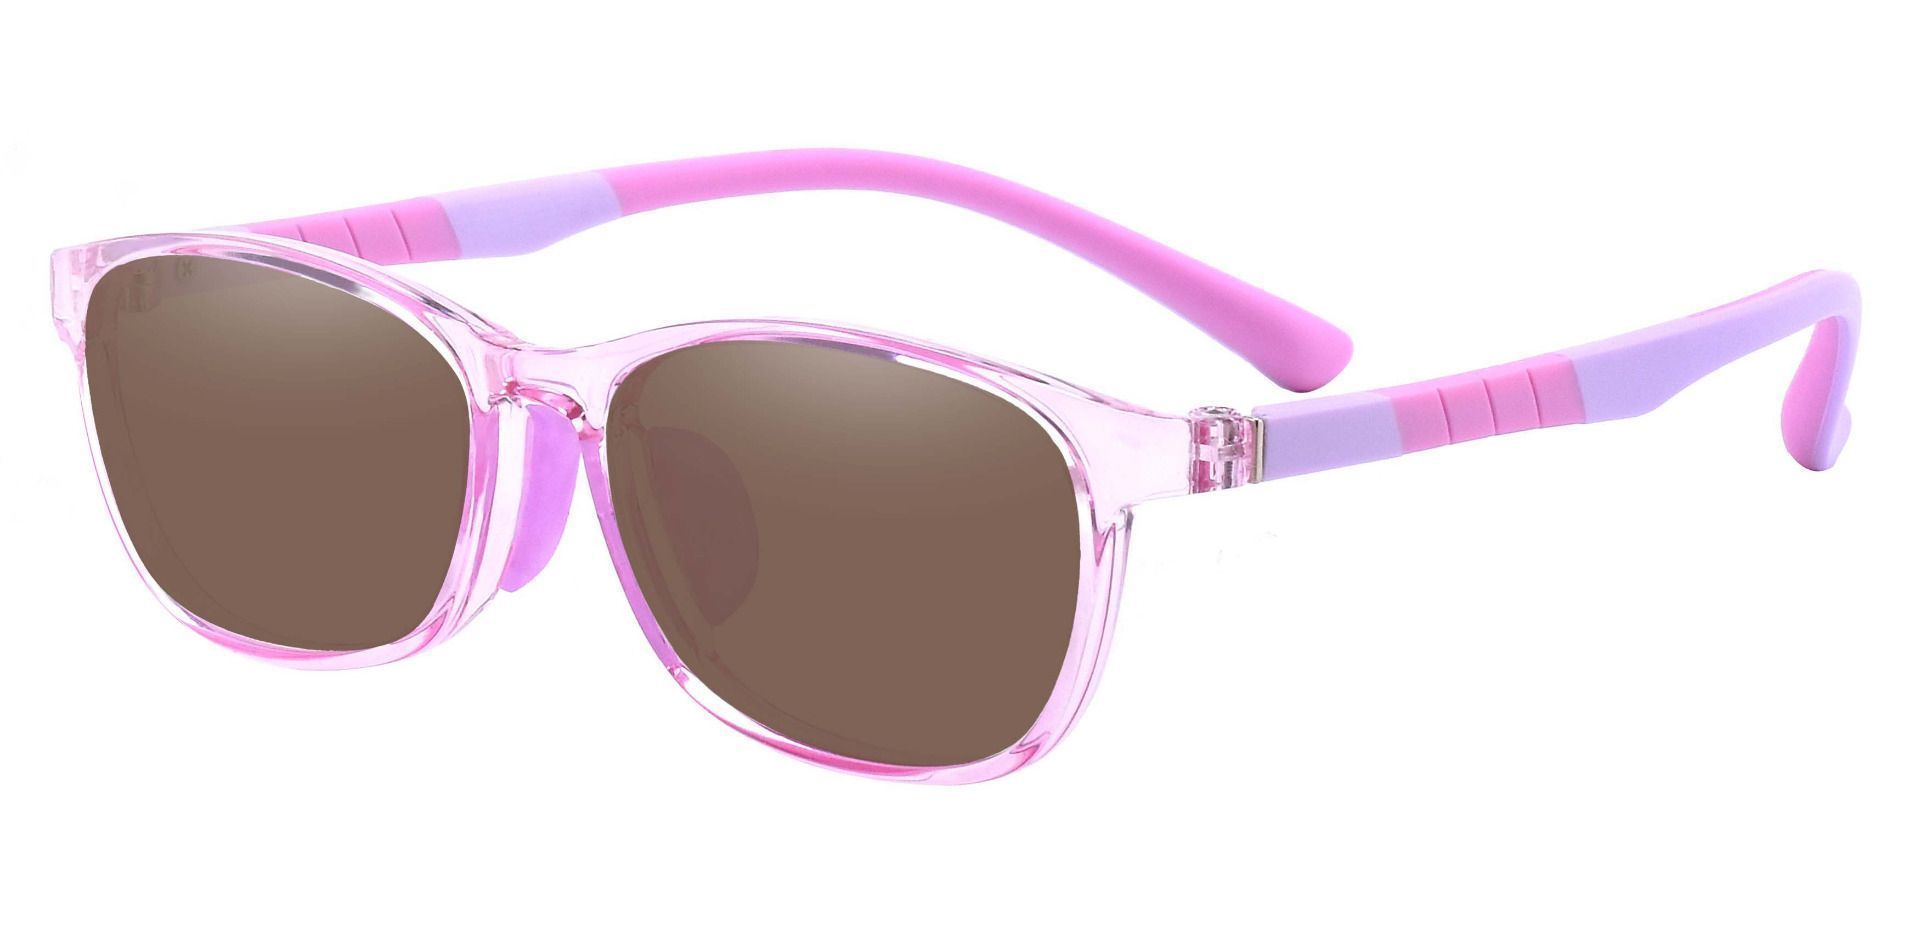 Cosmo Rectangle Prescription Sunglasses - Purple Frame With Brown Lenses